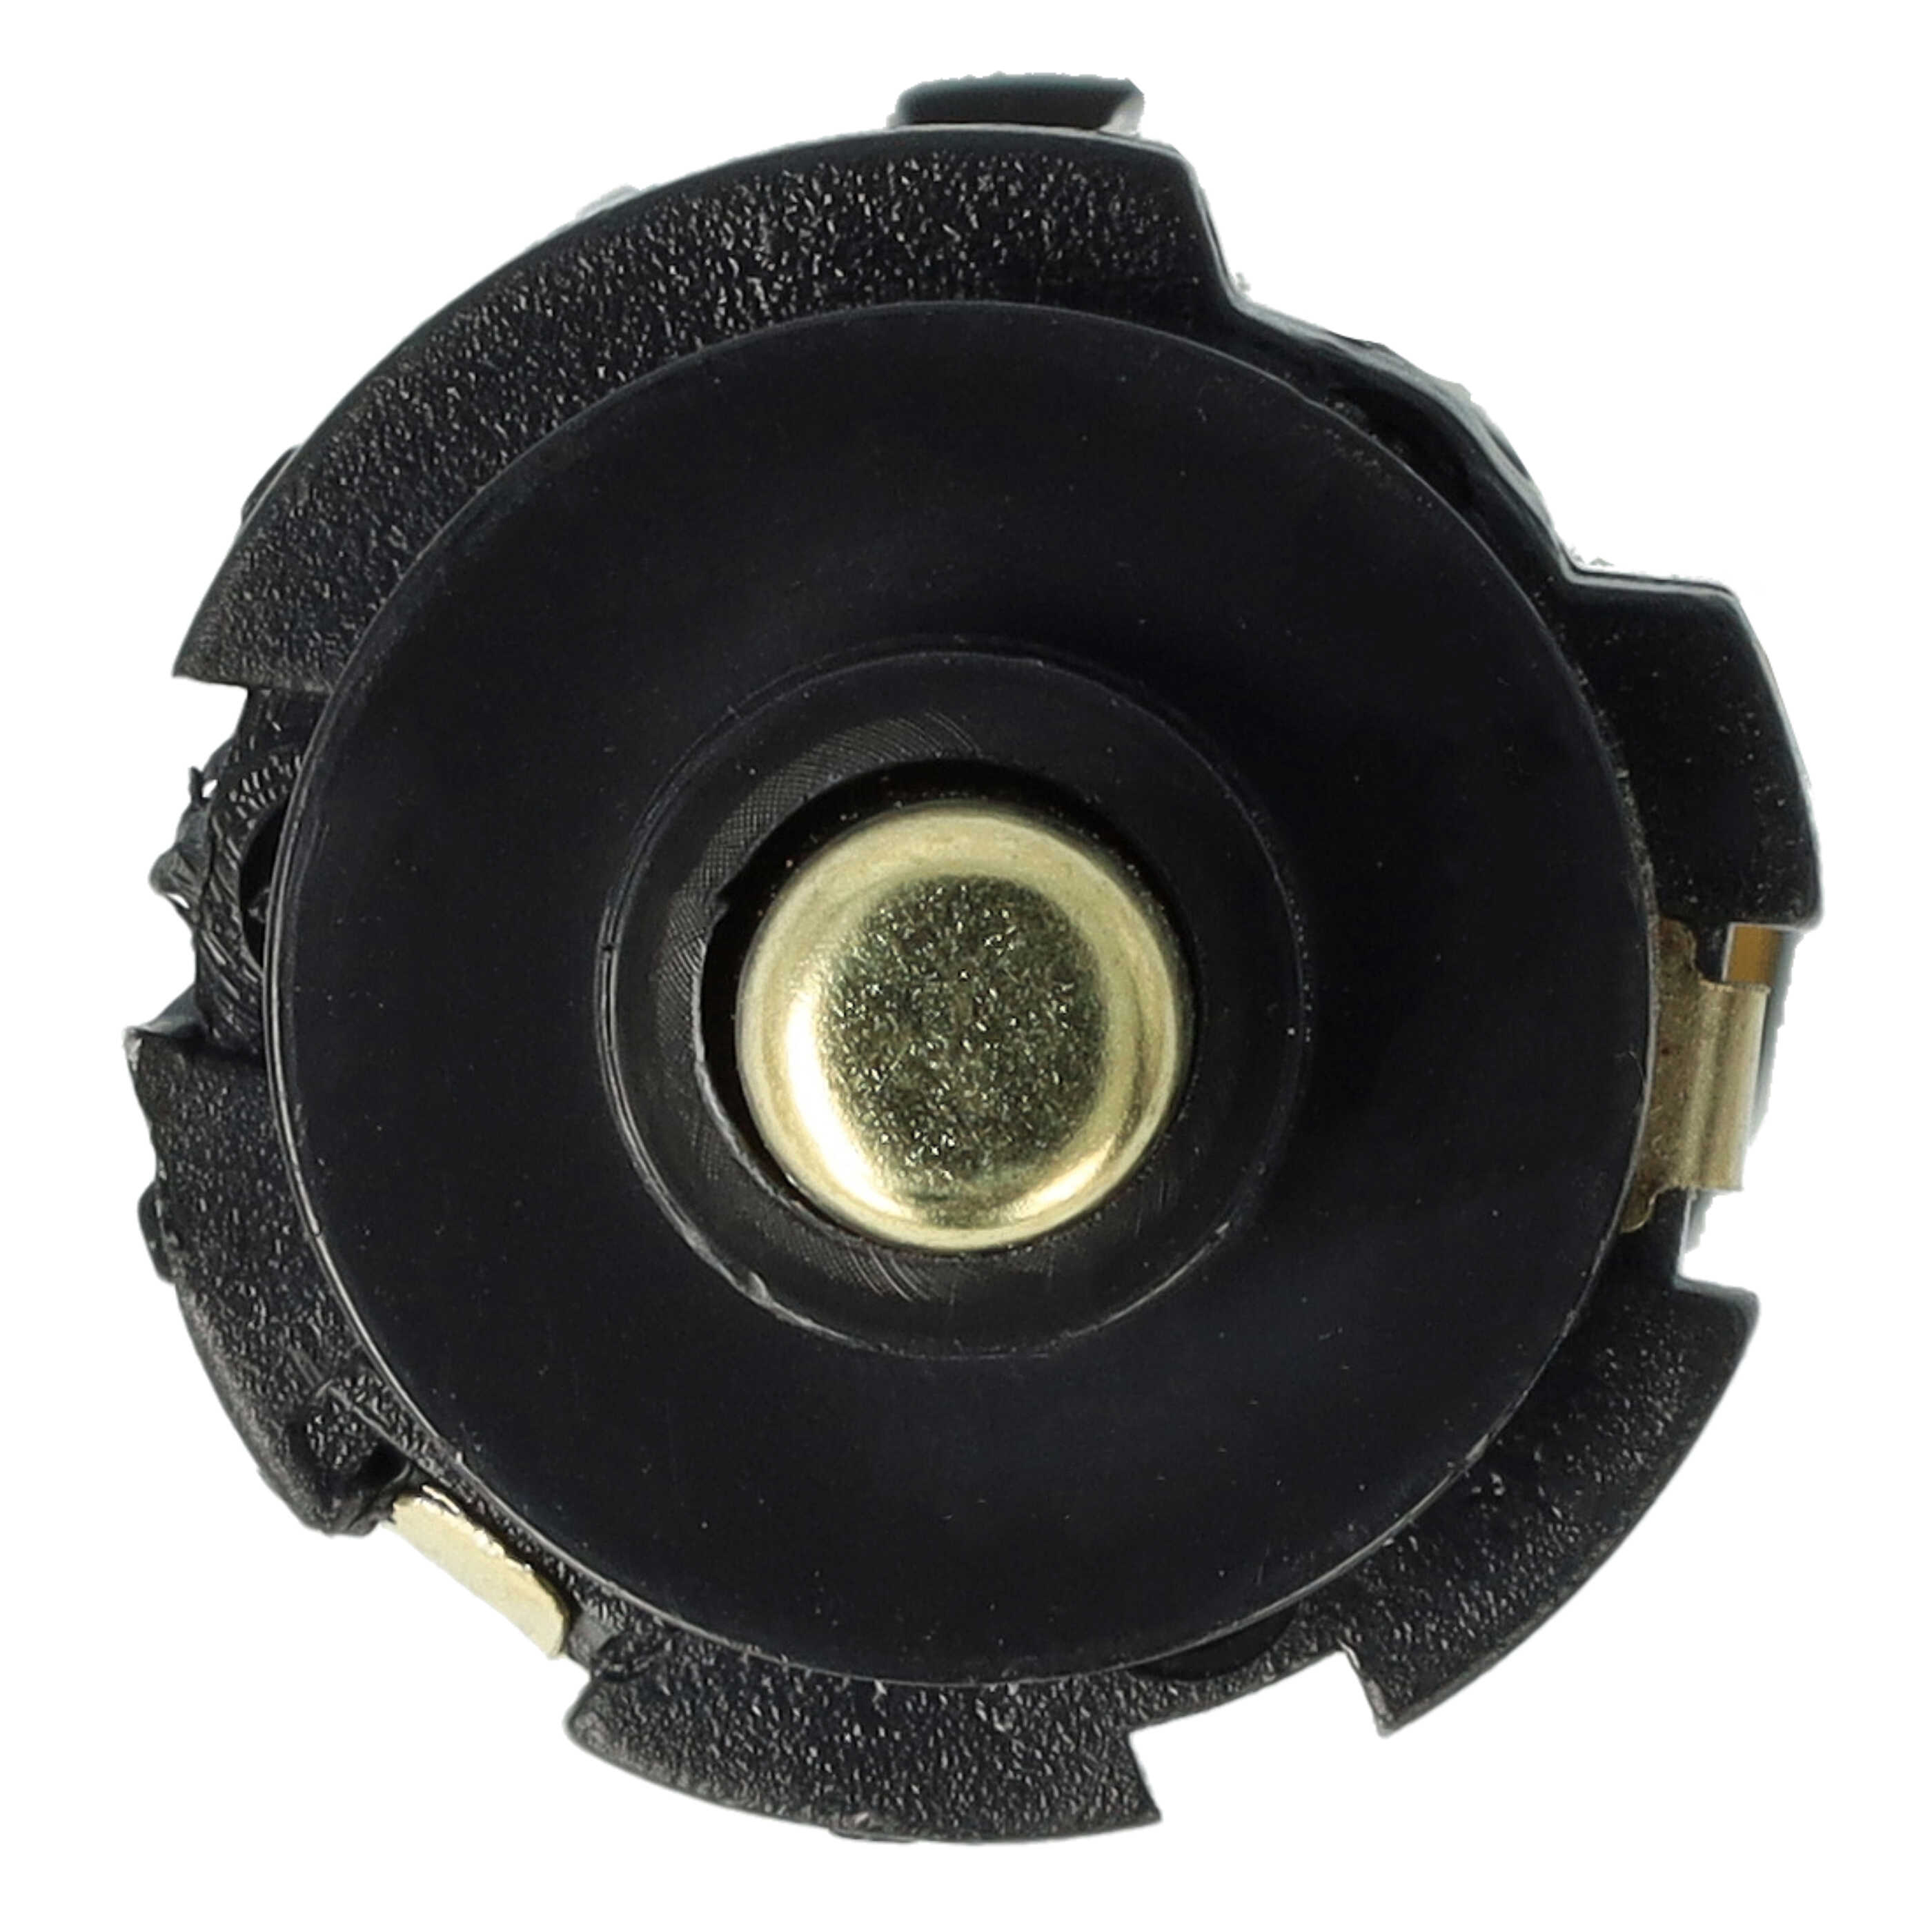 Boitier convertisseur 3x piles Micro / AAA vers 18650 pour lampe torche